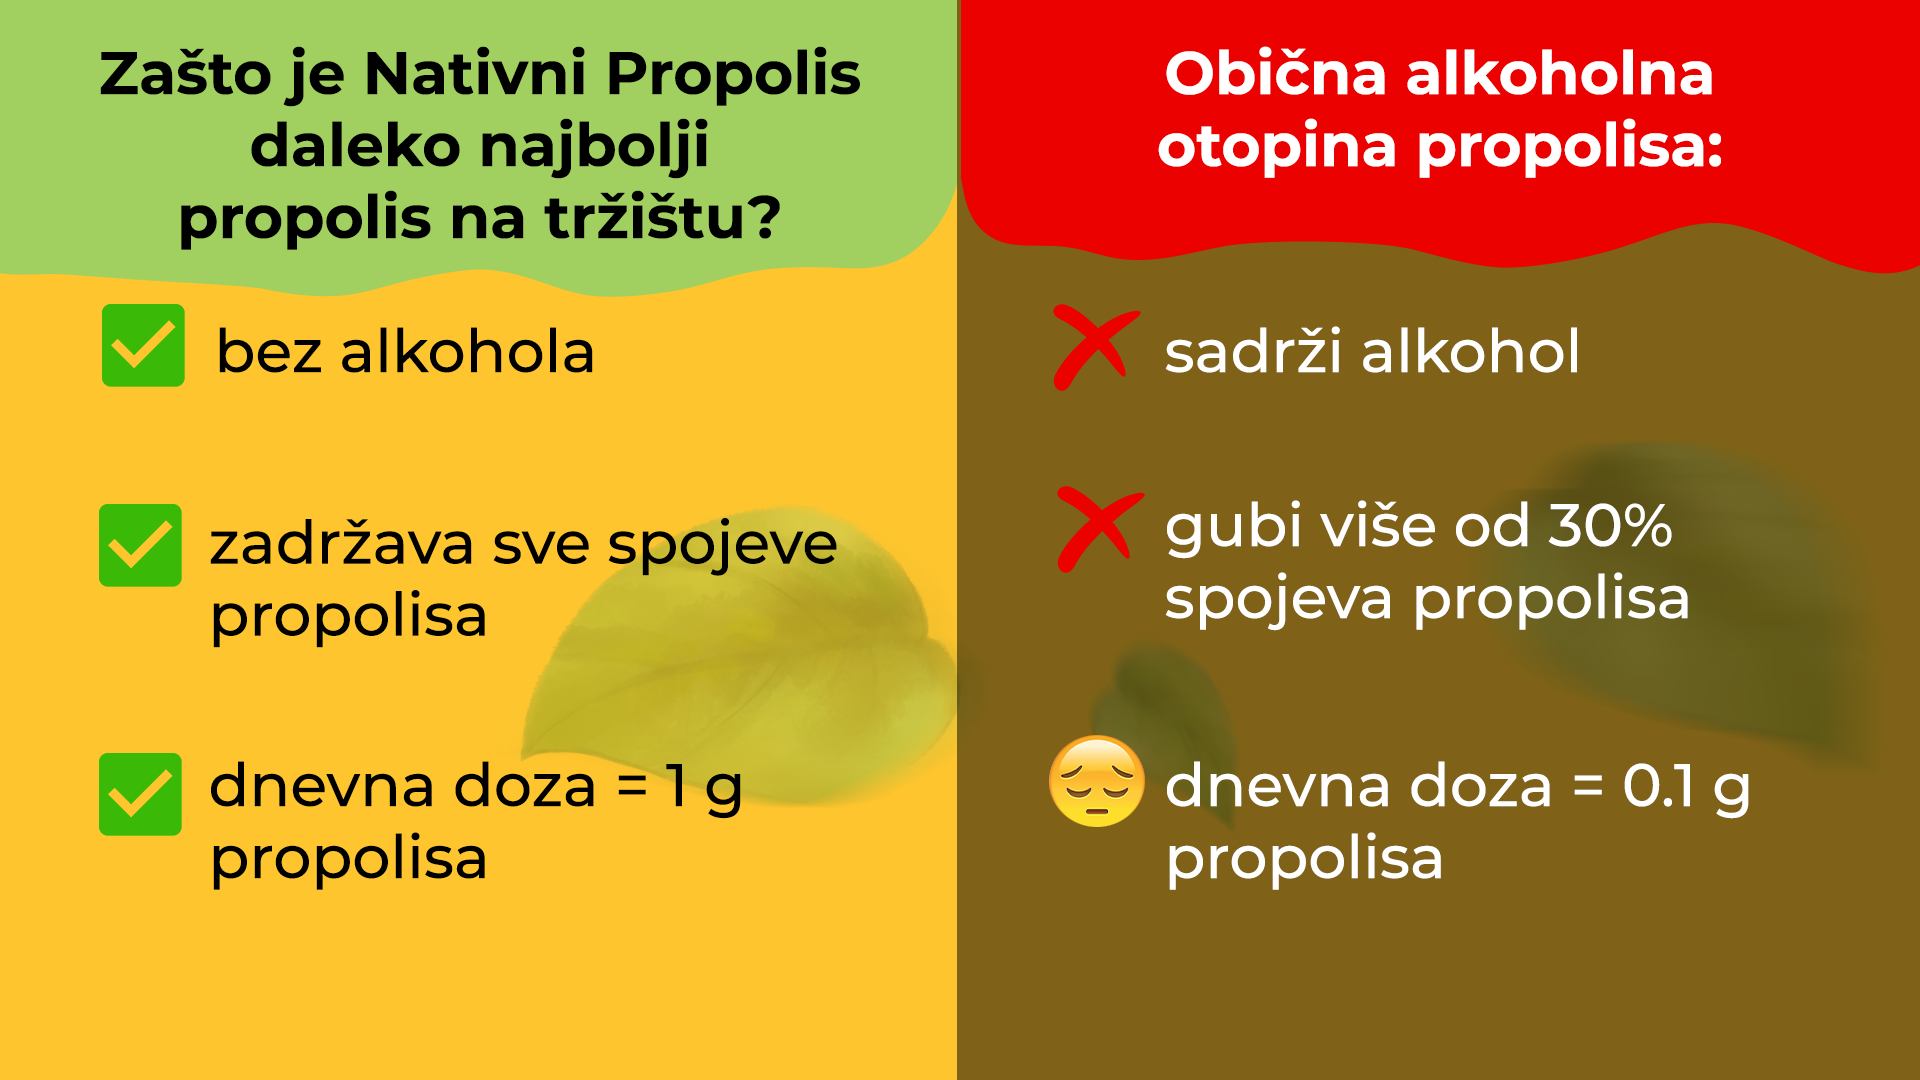 Usporedba propolisa